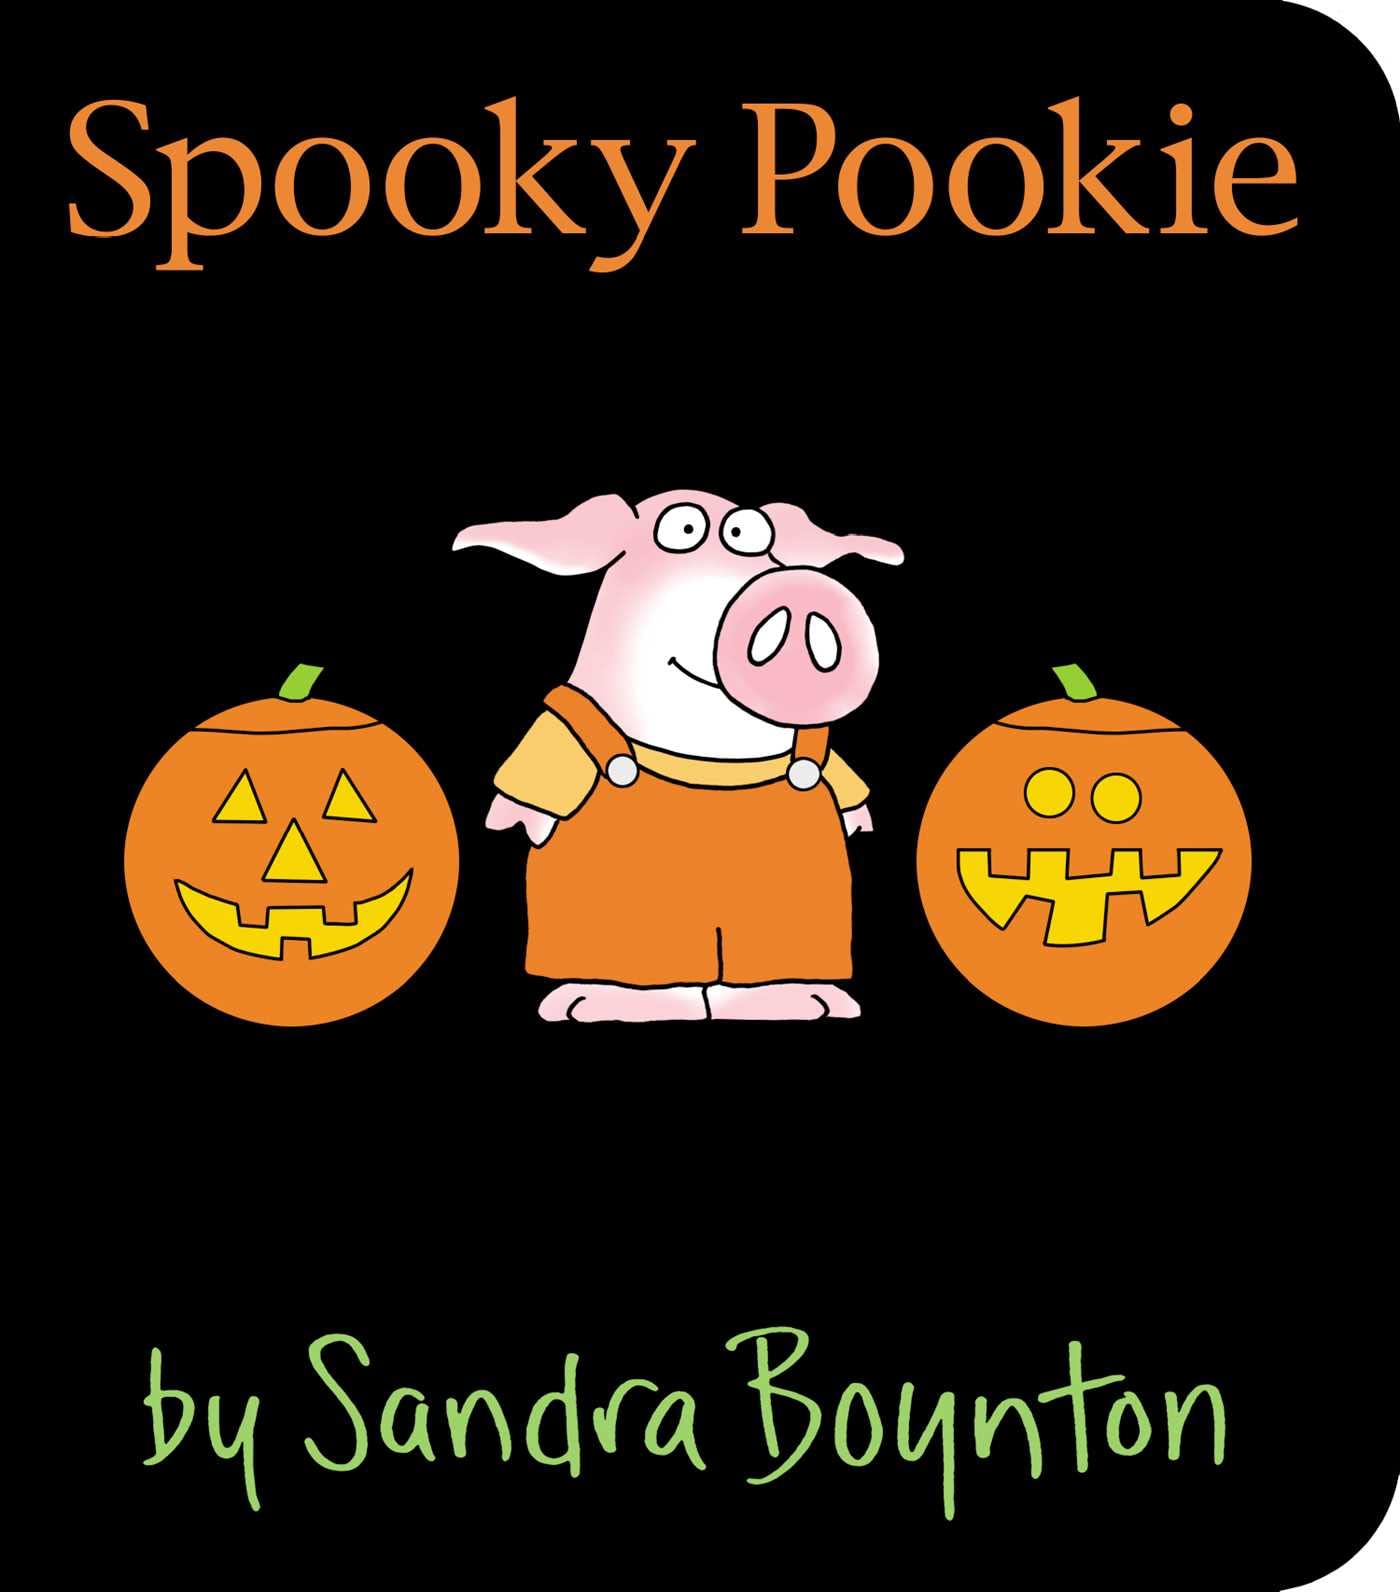 "Spooky Pookie" by Sandra Boynton